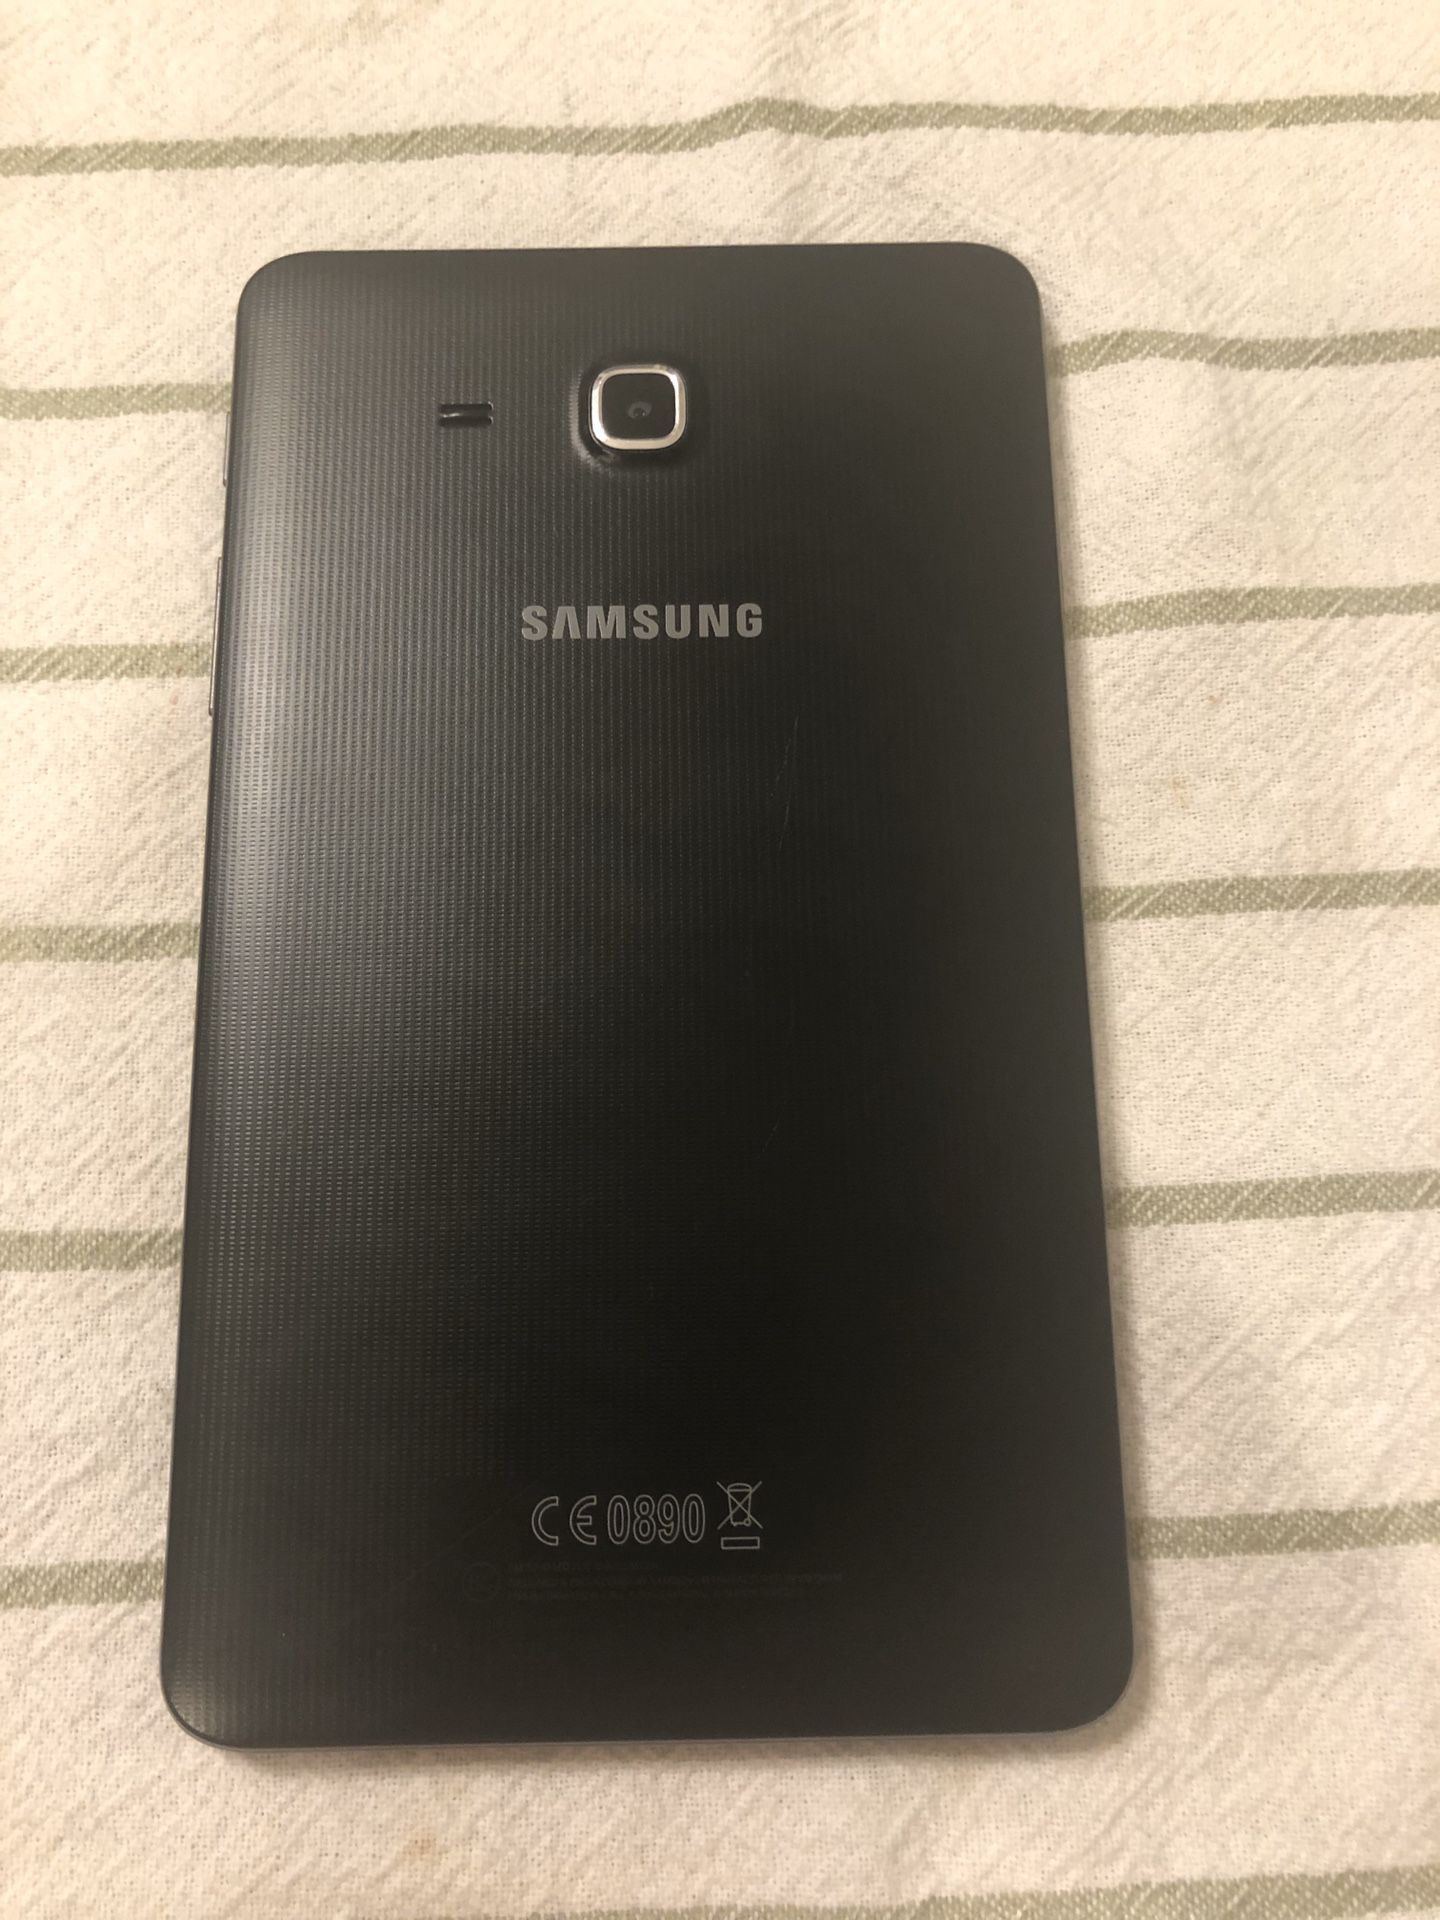 Samsung black tablet